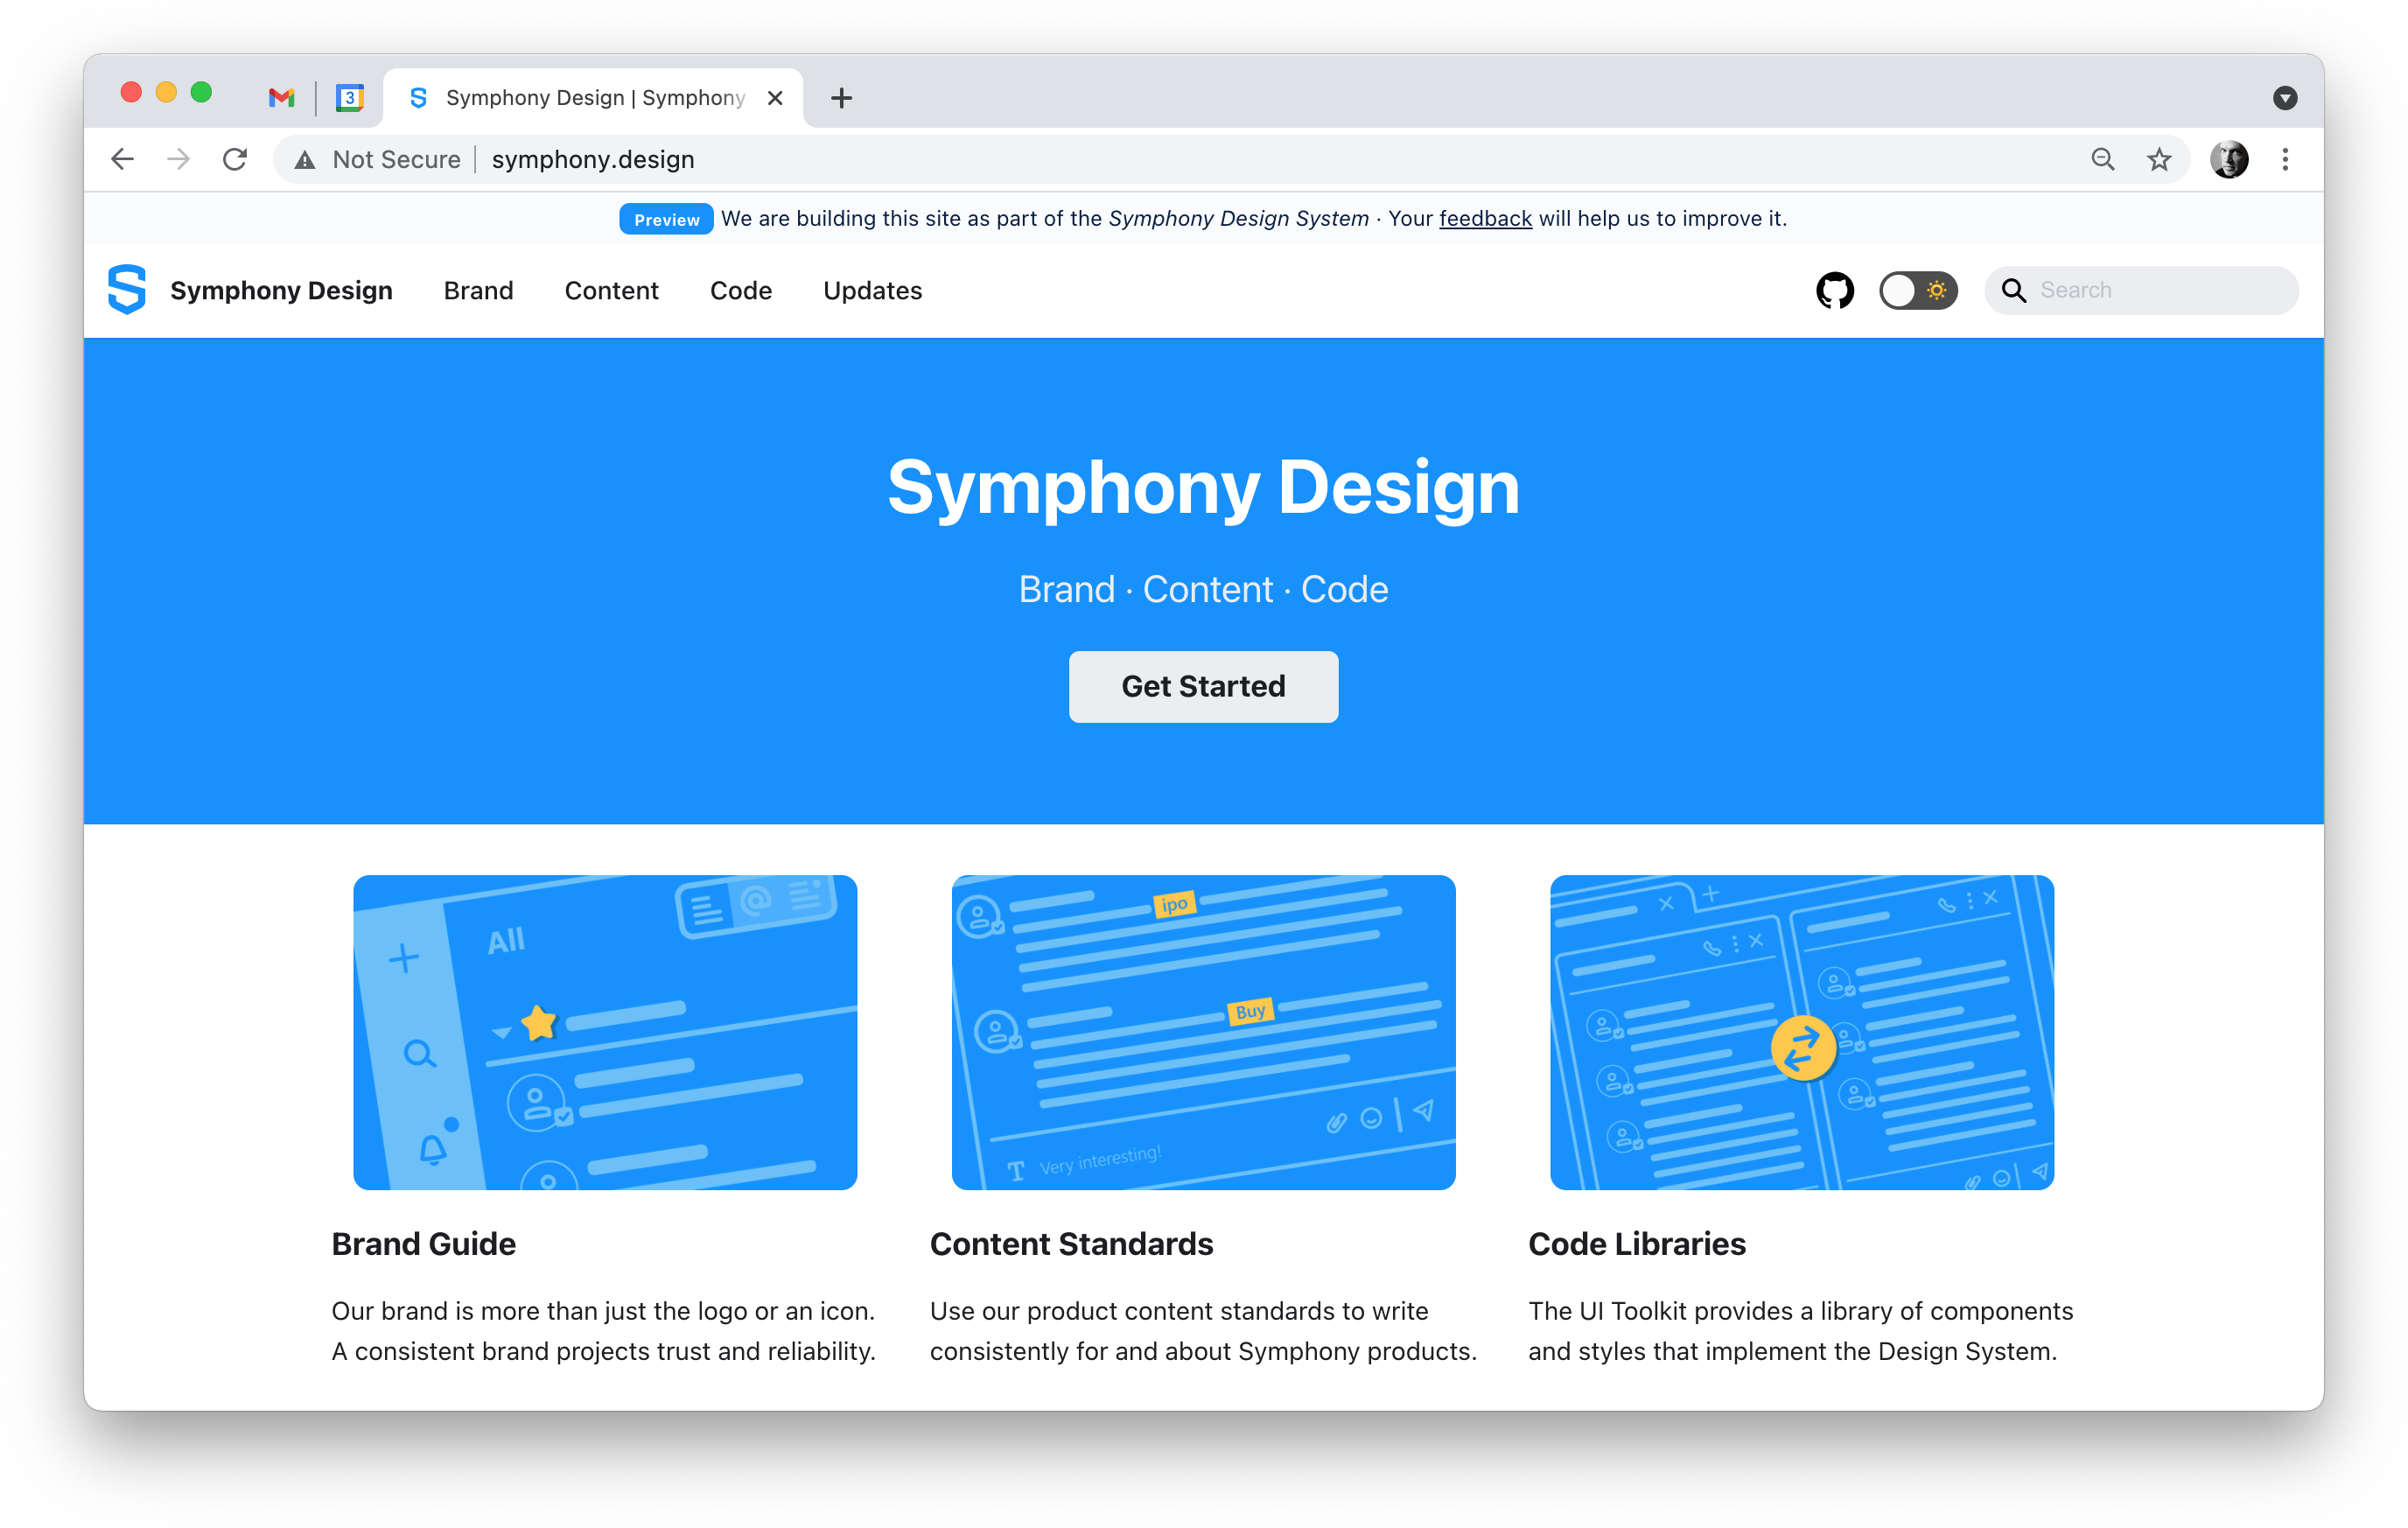 symphony.design landing page